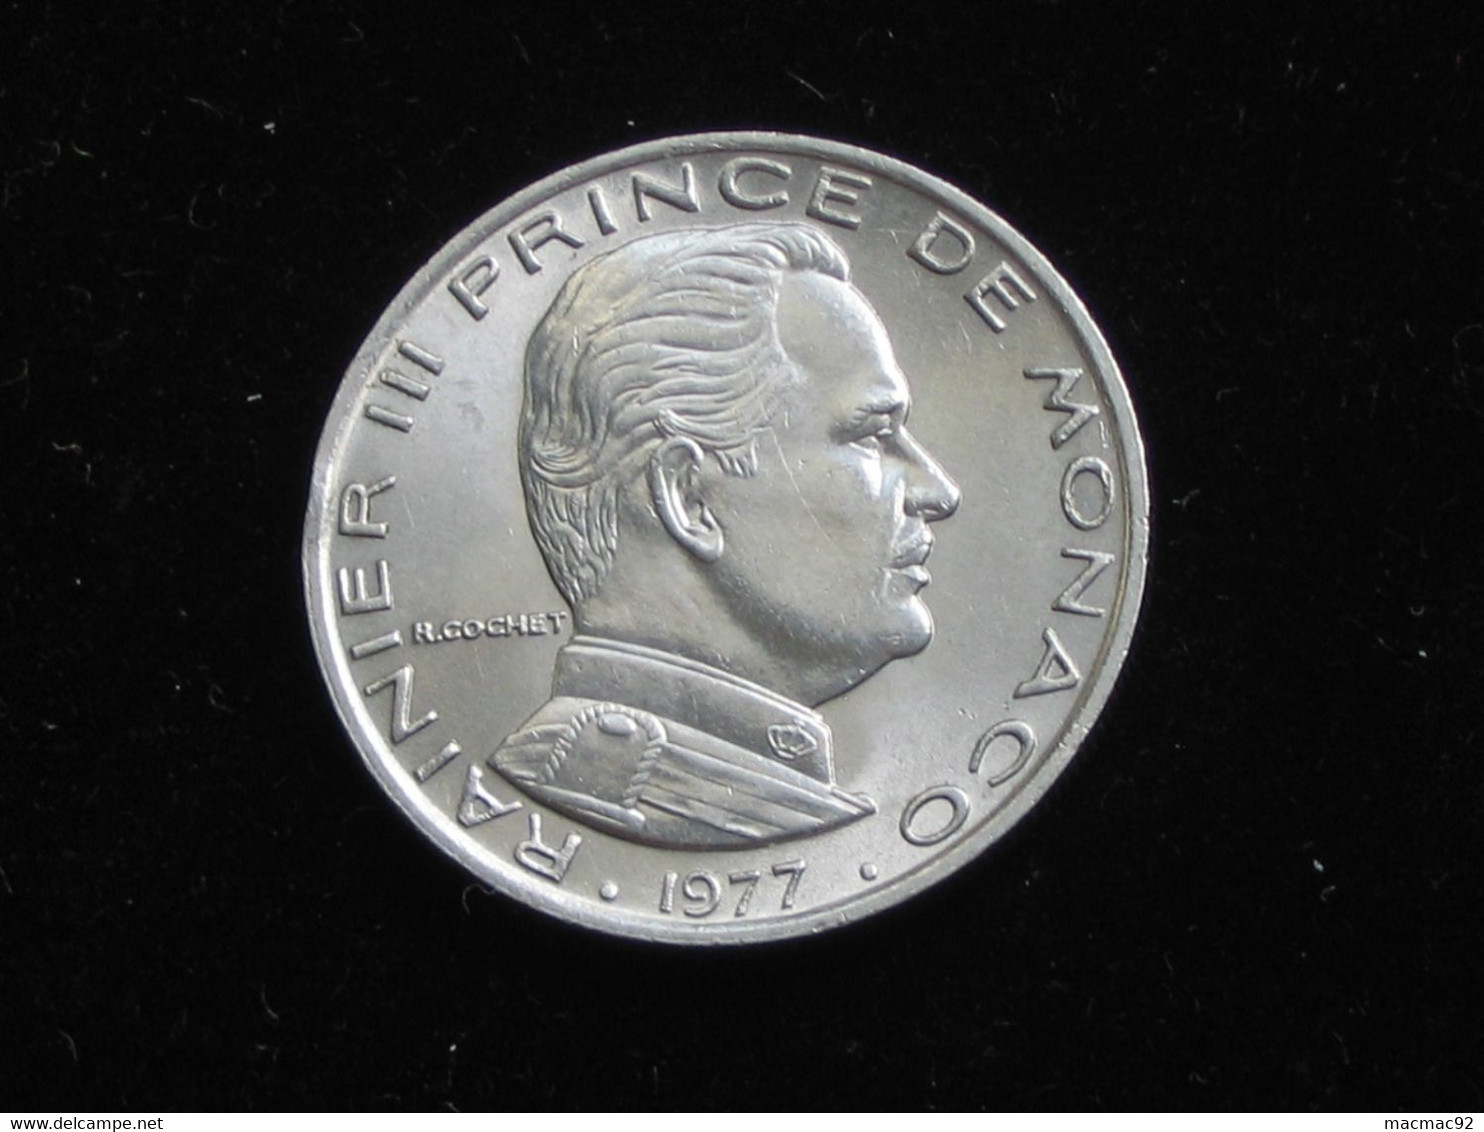 MONACO - 1 Franc 1977 - Rainier III Prince De Monaco **** EN ACHAT IMMEDIAT **** - 1949-1956 Old Francs